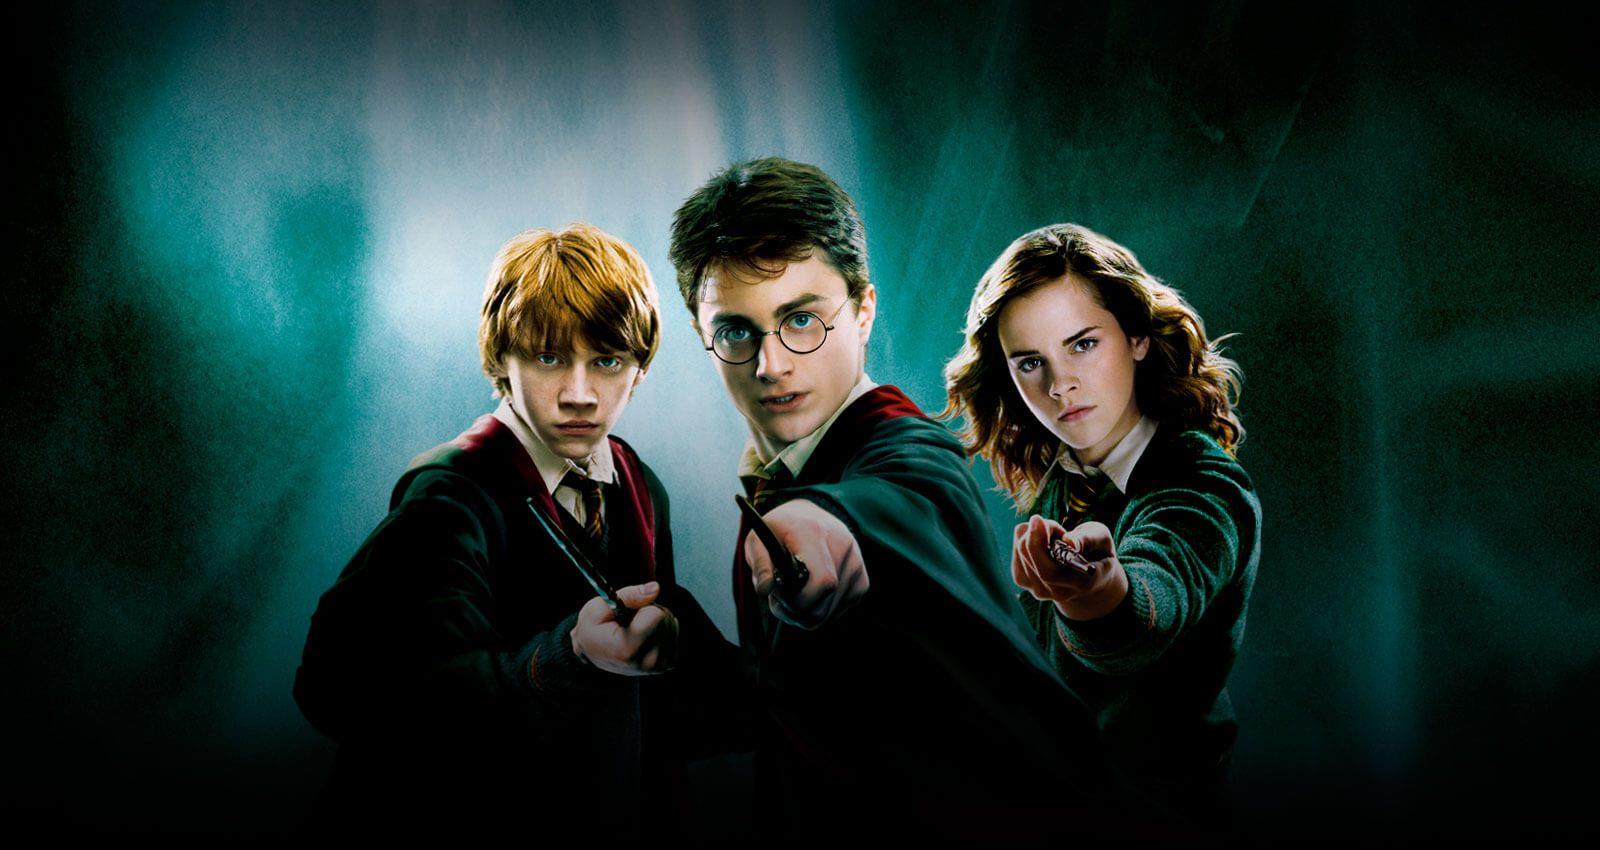 Harry Potter e i suoi amici